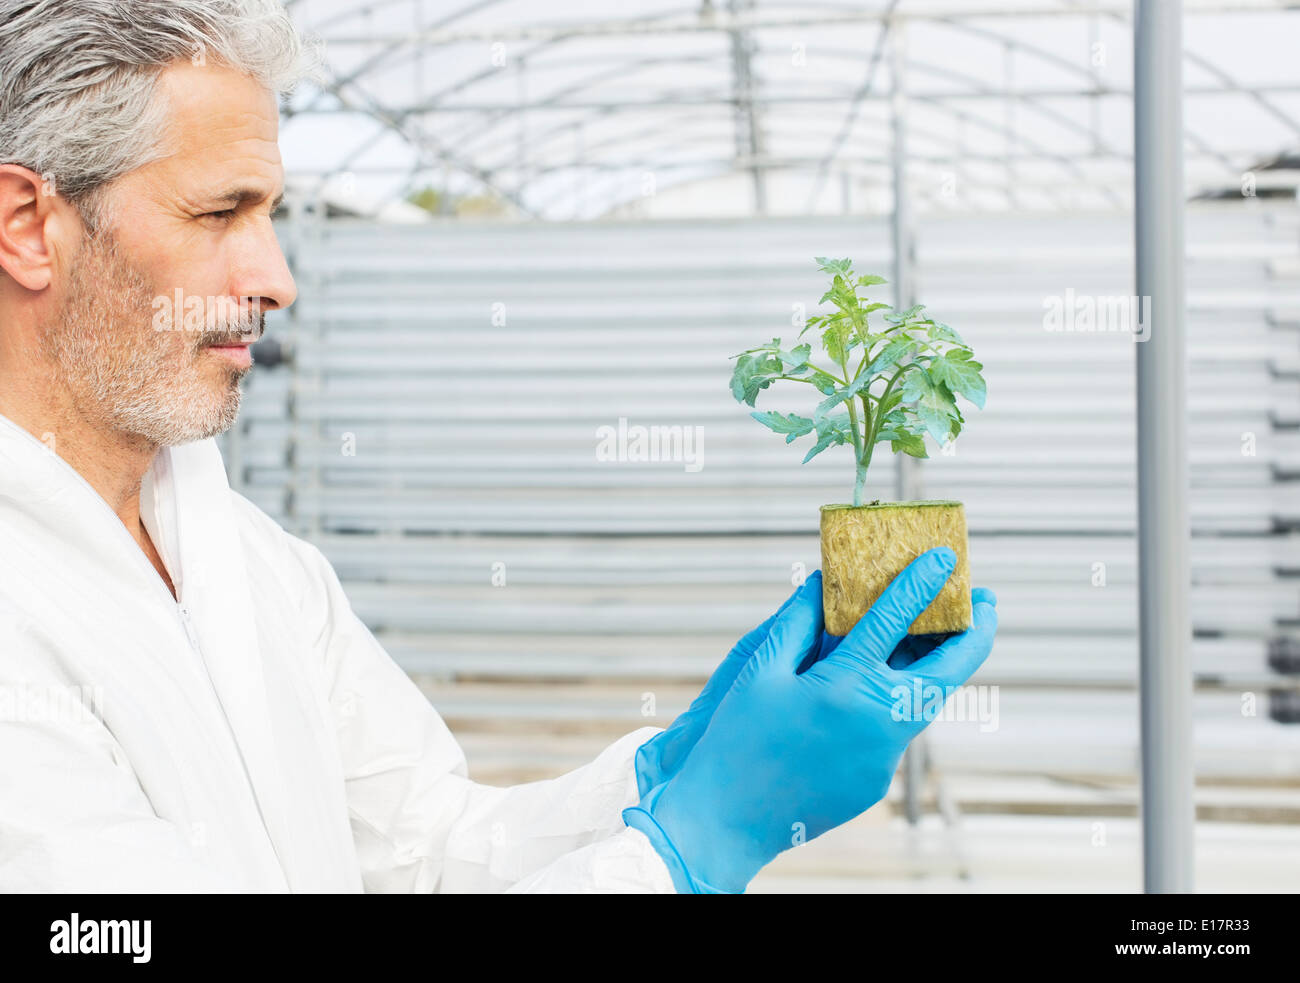 Botanist holding plant in greenhouse Stock Photo